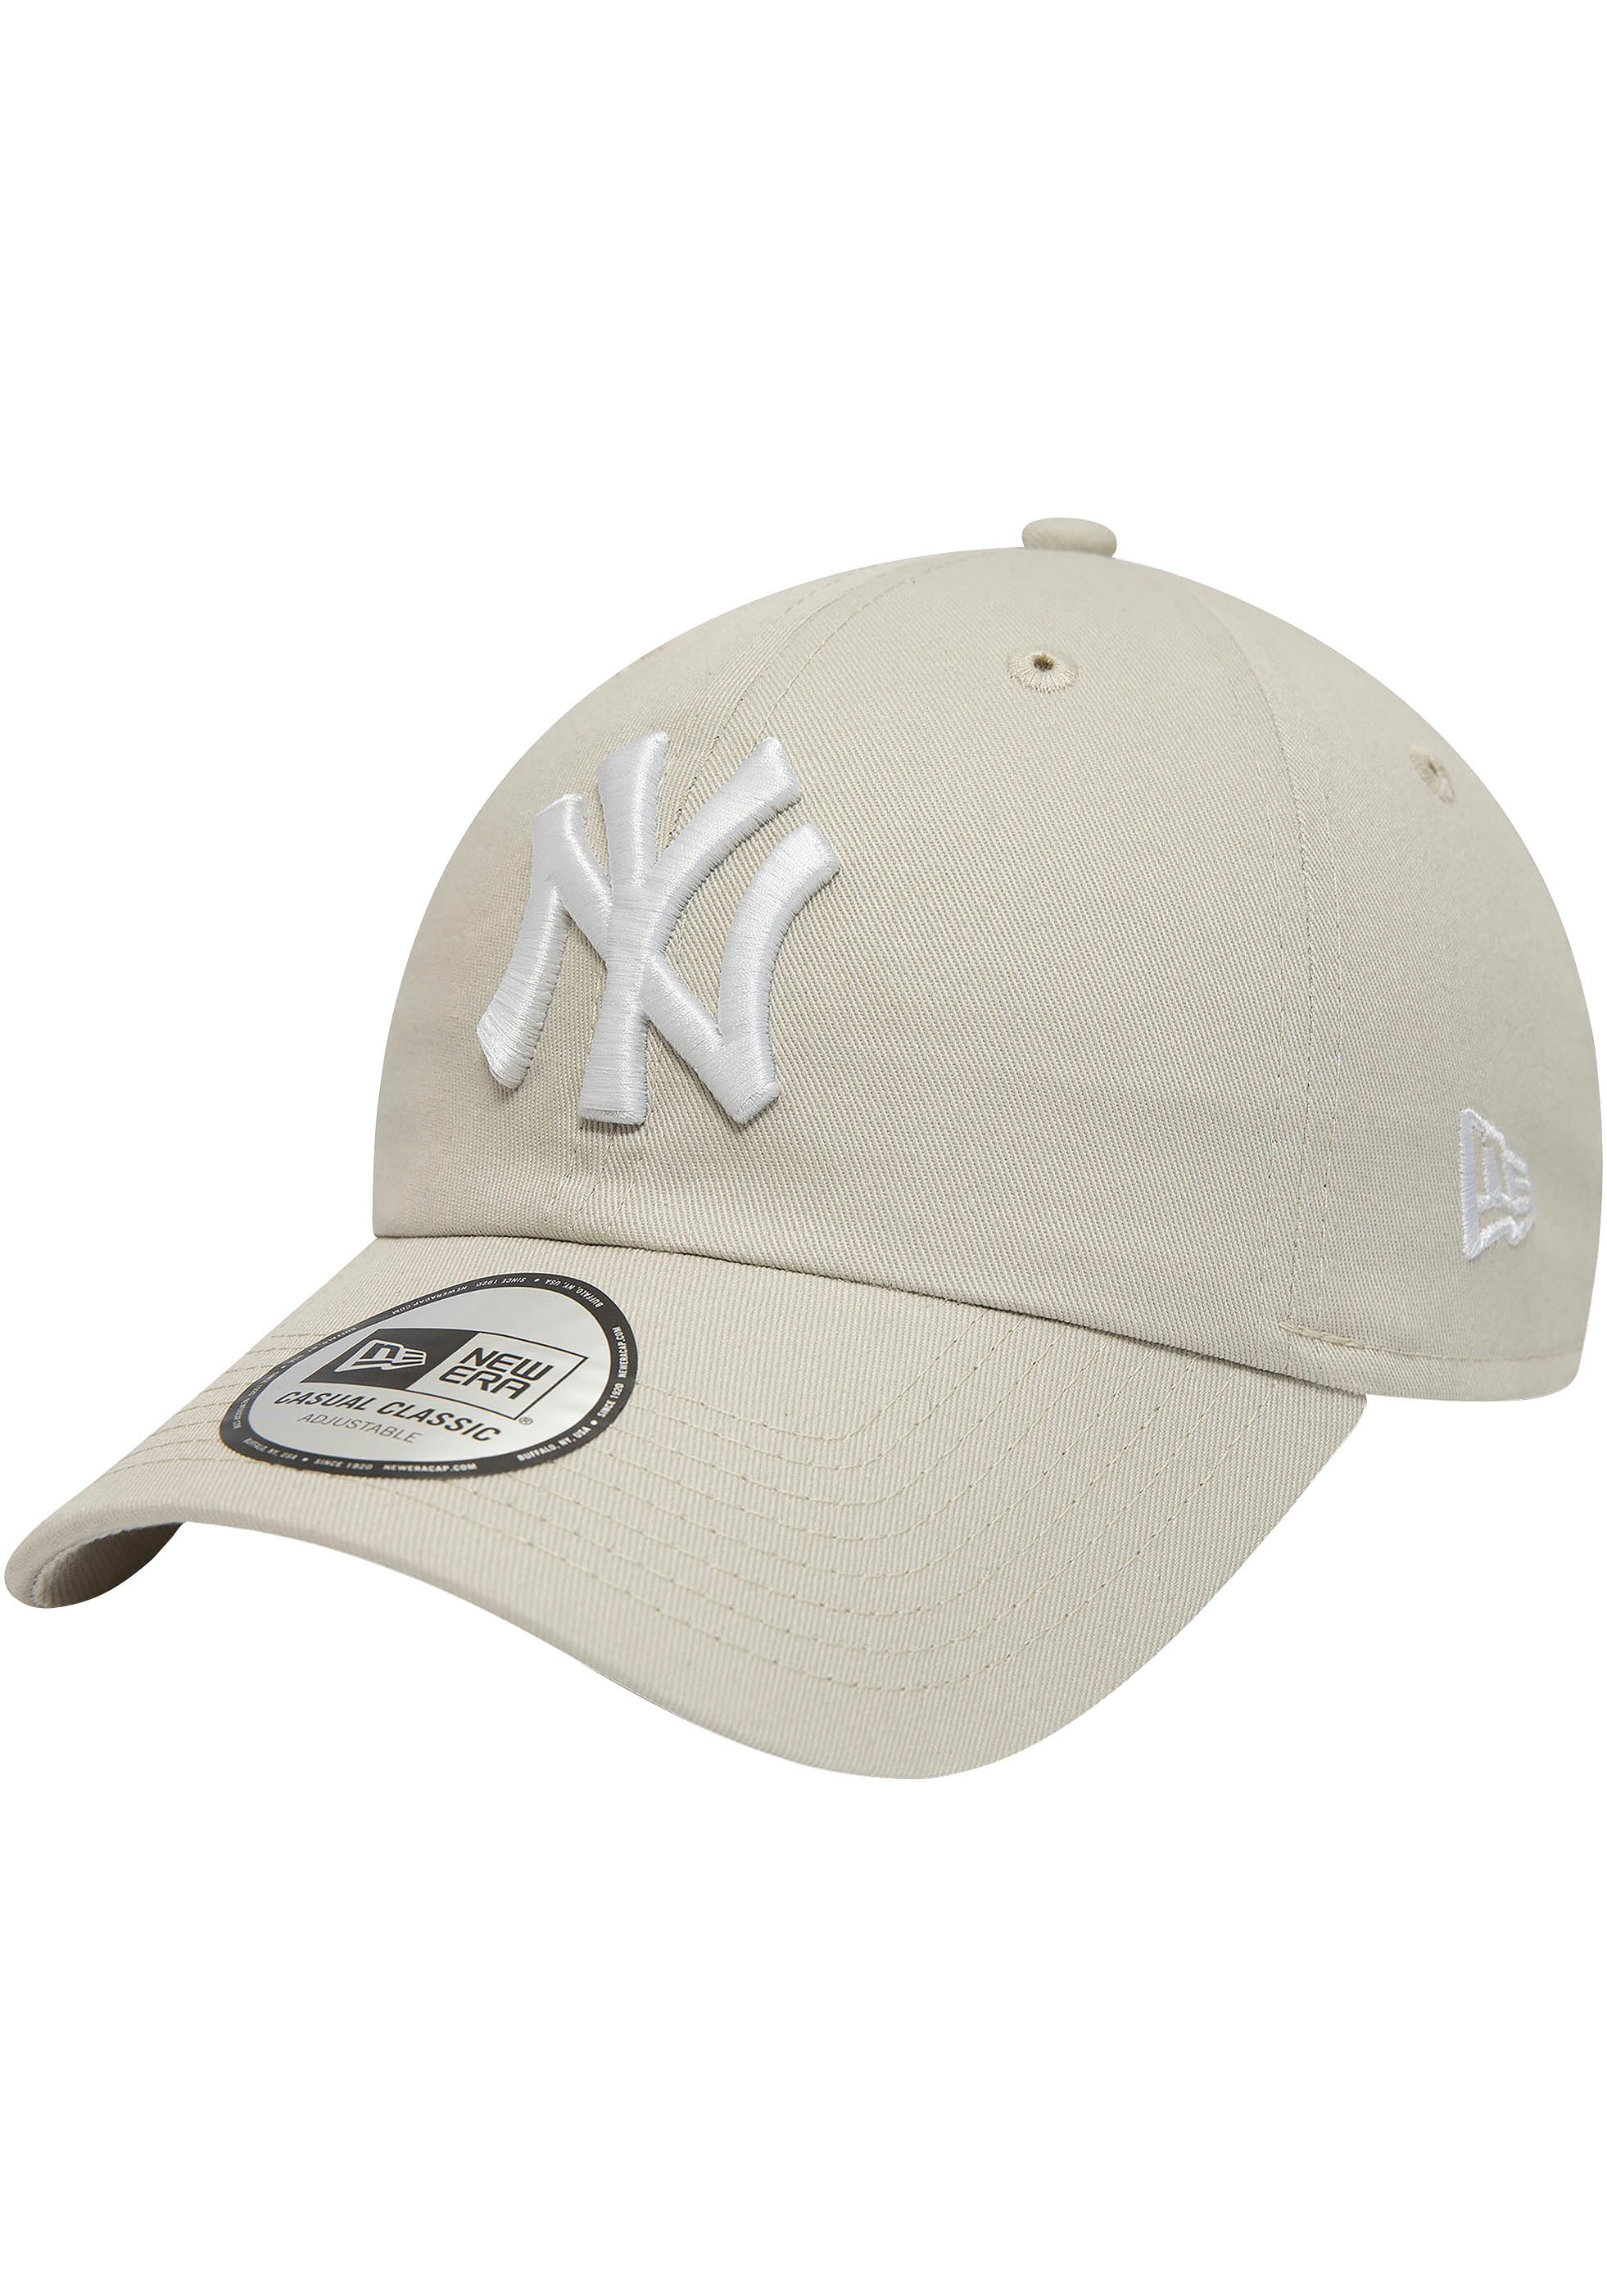 Baseball »Baseball Cap 940Leag Era walking I\'m online NY« New Cap Era Cap | kaufen New